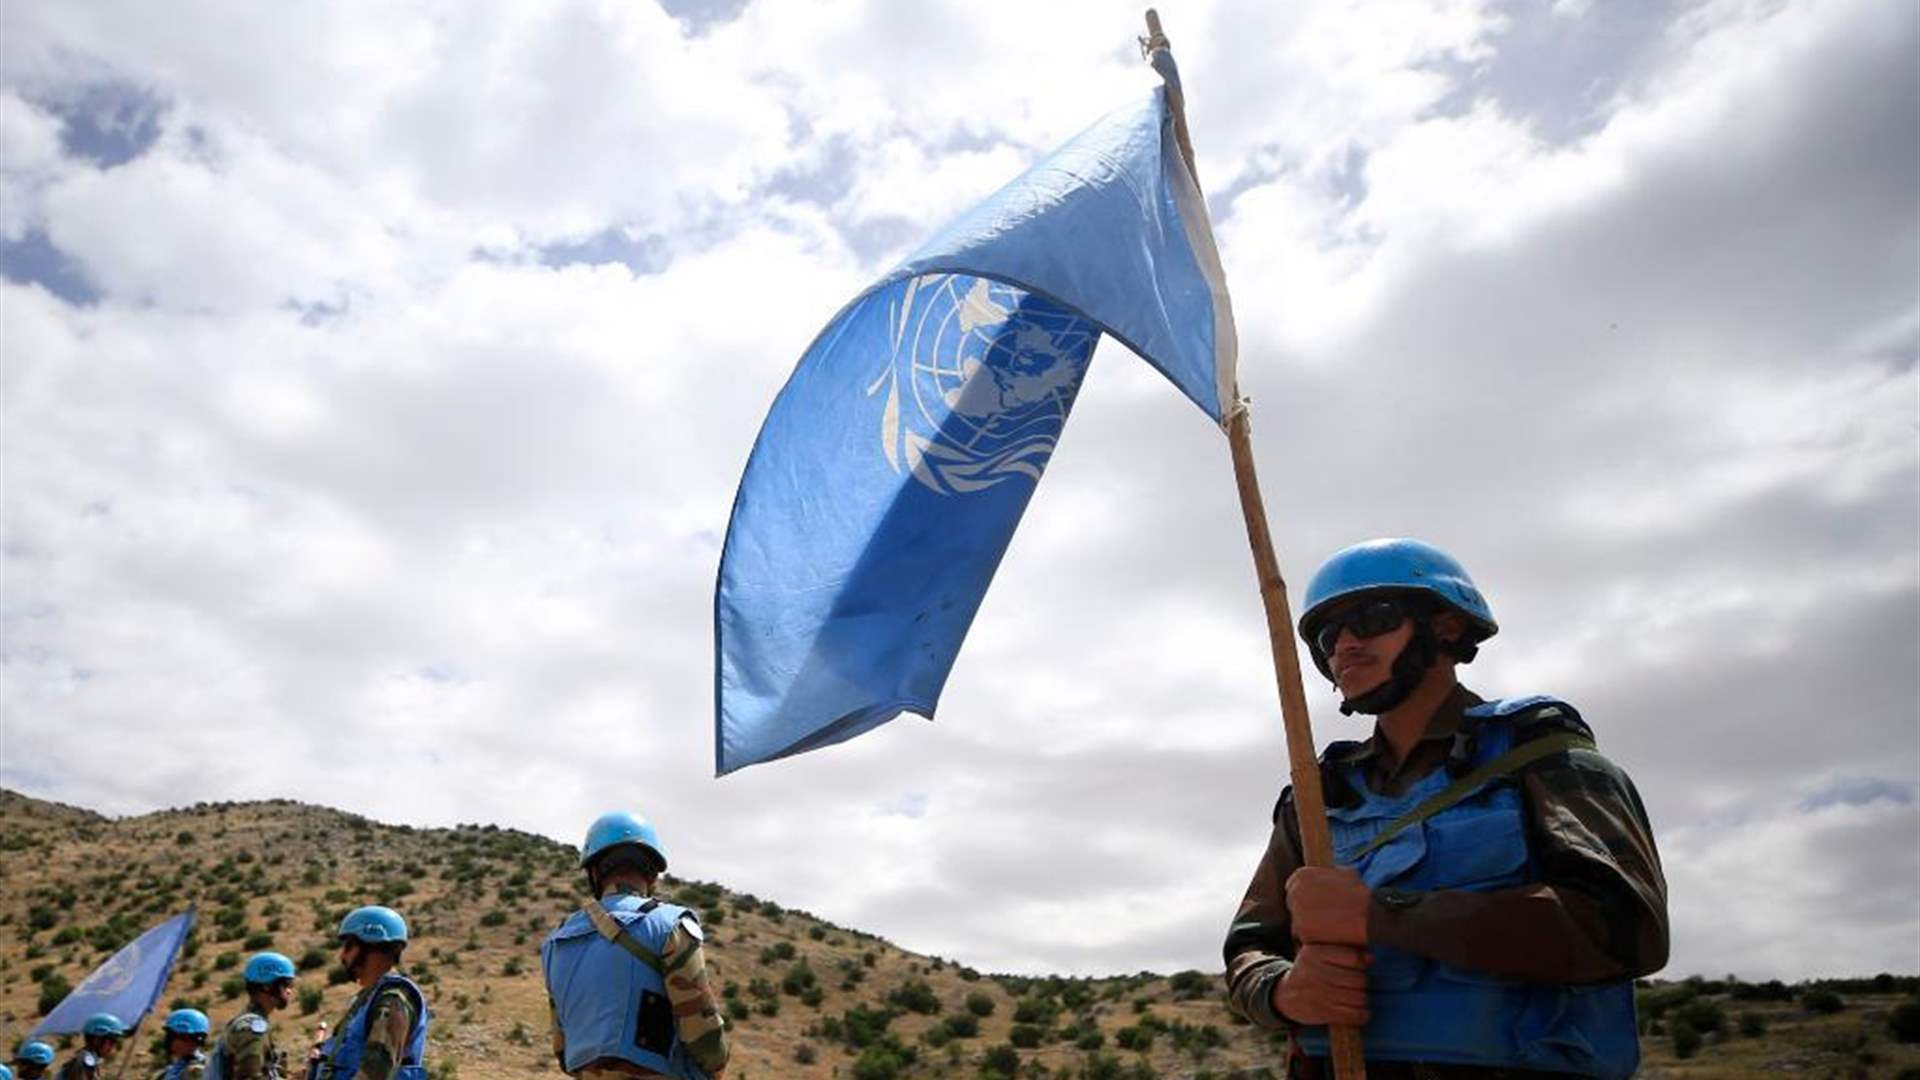 Peacekeepers on high alert: UNIFIL&#39;s vigilance in monitoring border activities after tensions between Lebanon, Israel